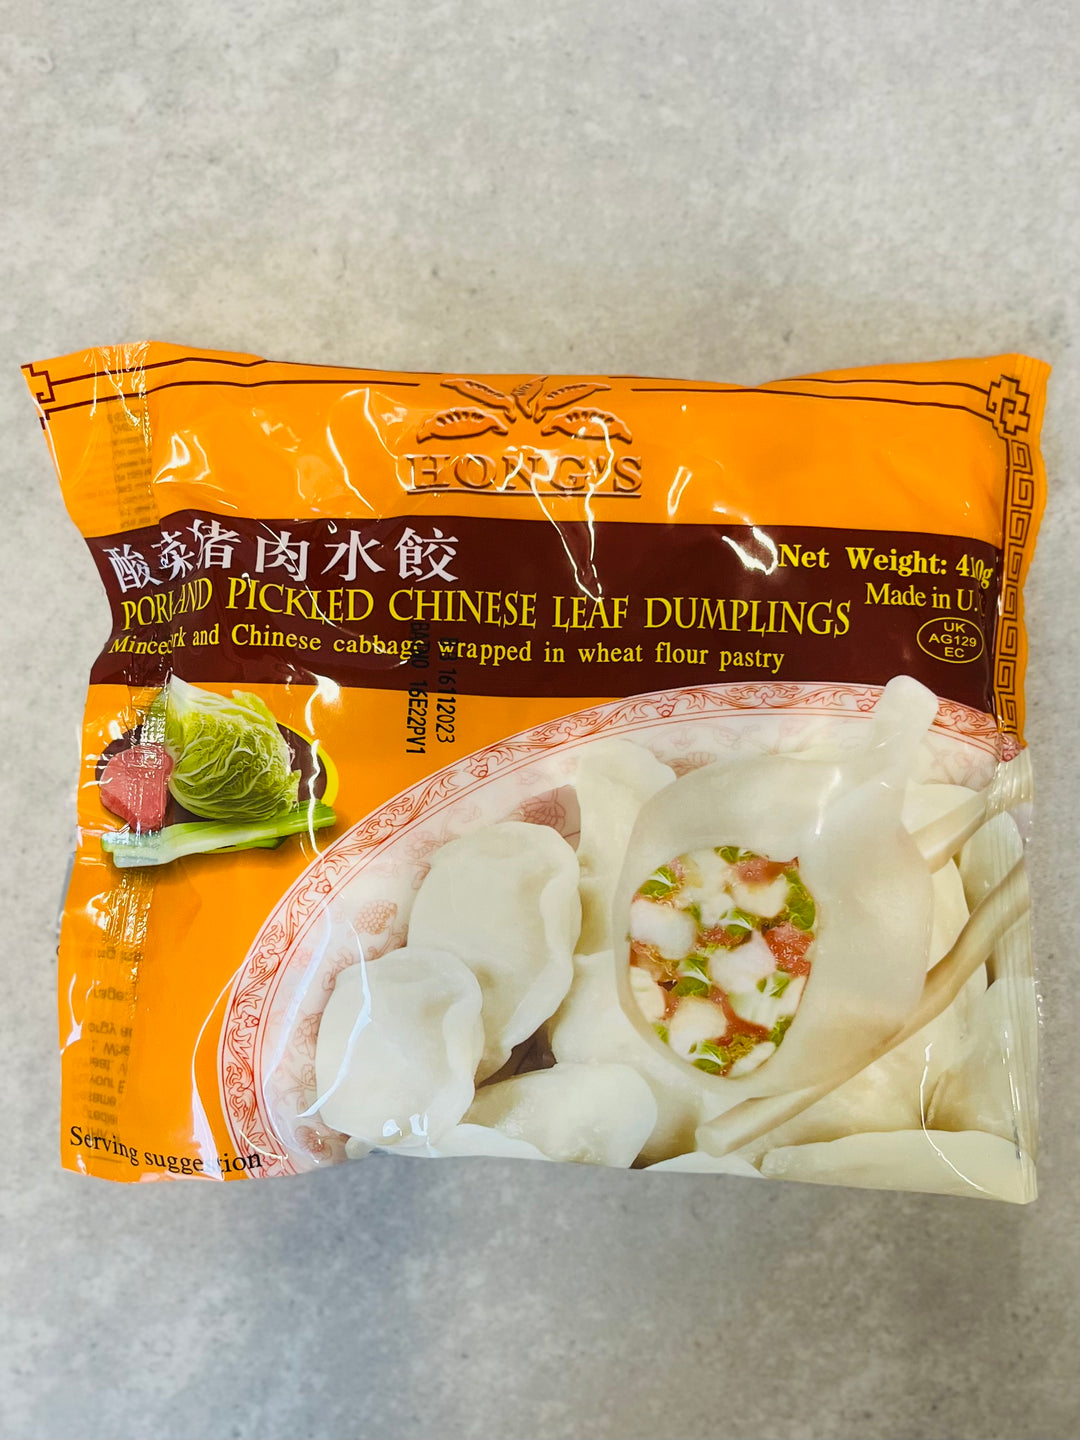 鸿字酸菜猪肉水饺410g Hong's Pork  Pickled C Leaf Dumplings